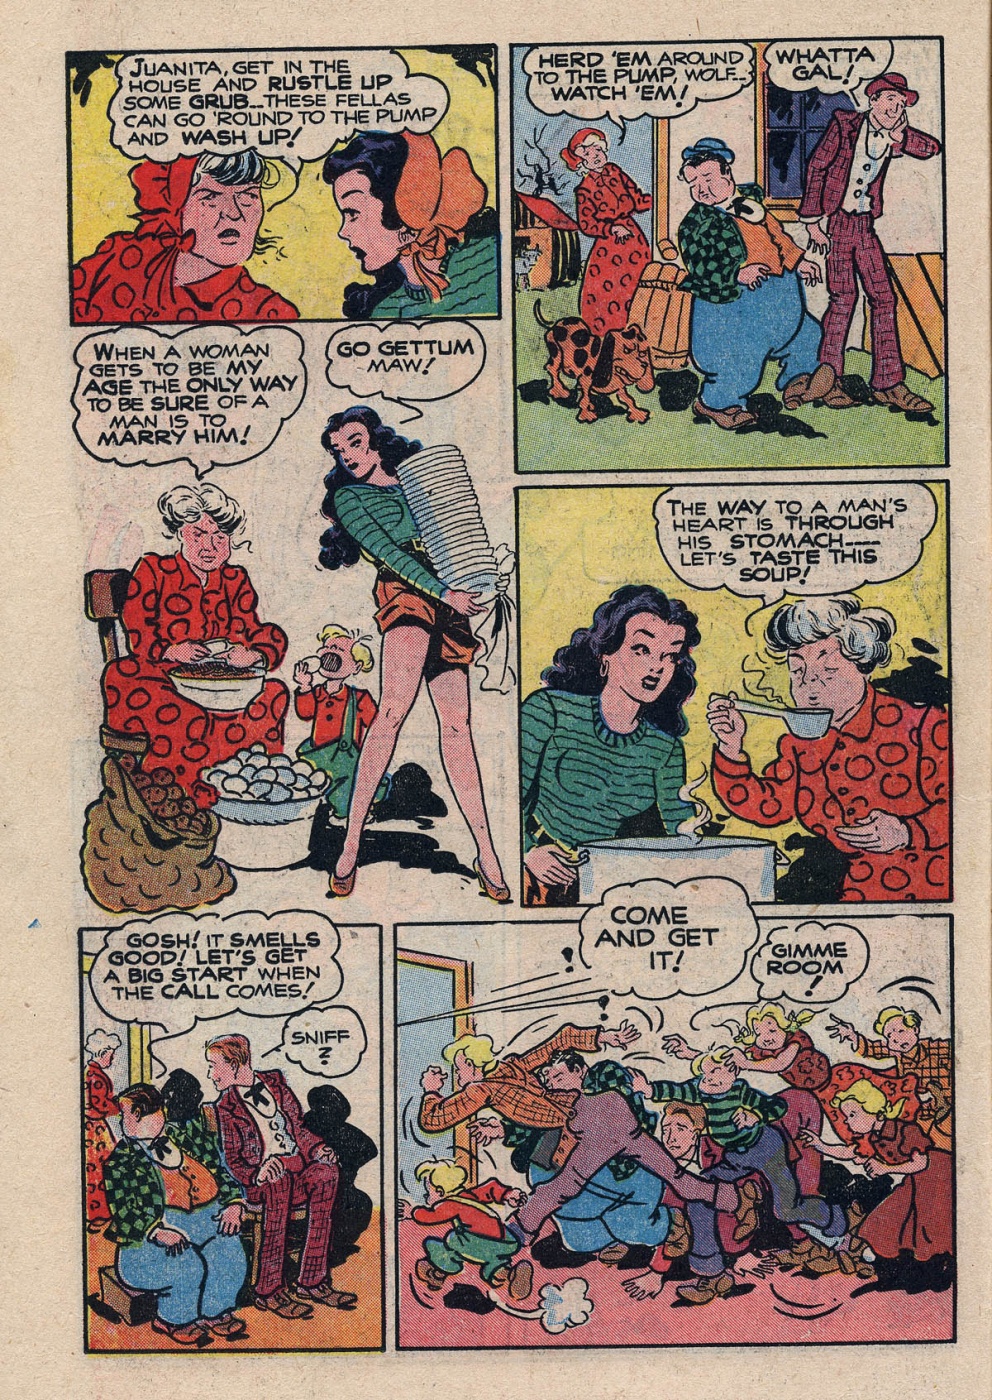 Funny Comic Strips - Abbott and Costello 001 (Feb 1948) 14